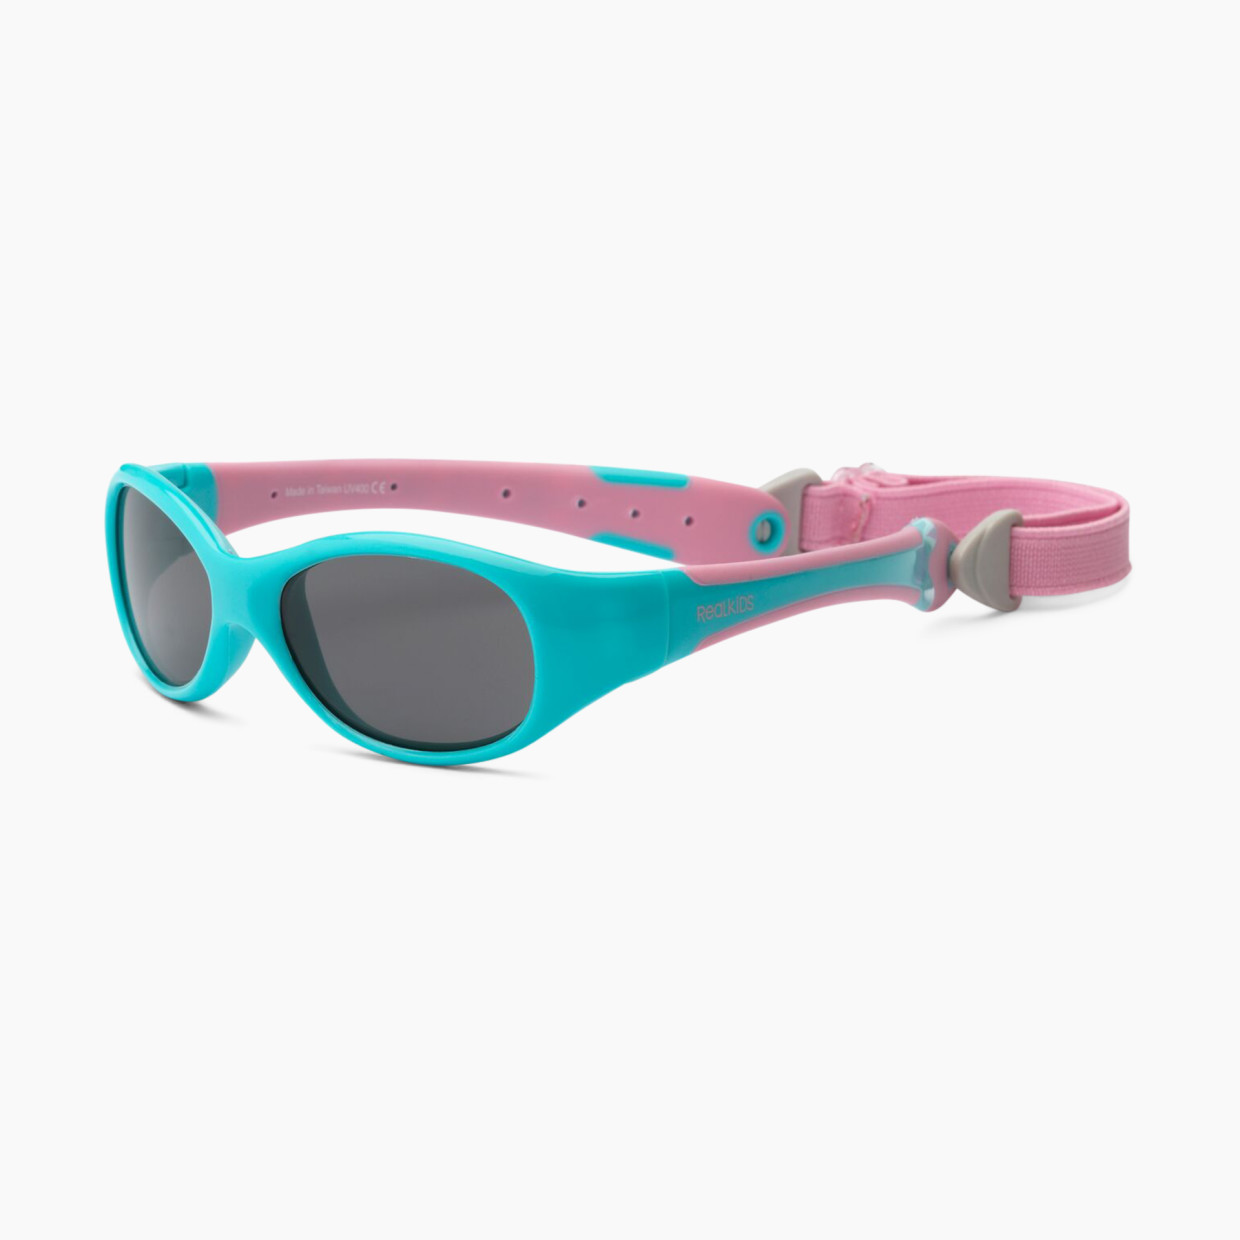 Real Shades Explorer Polarized Sunglasses - Aqua/Pink, 0-24 Months.